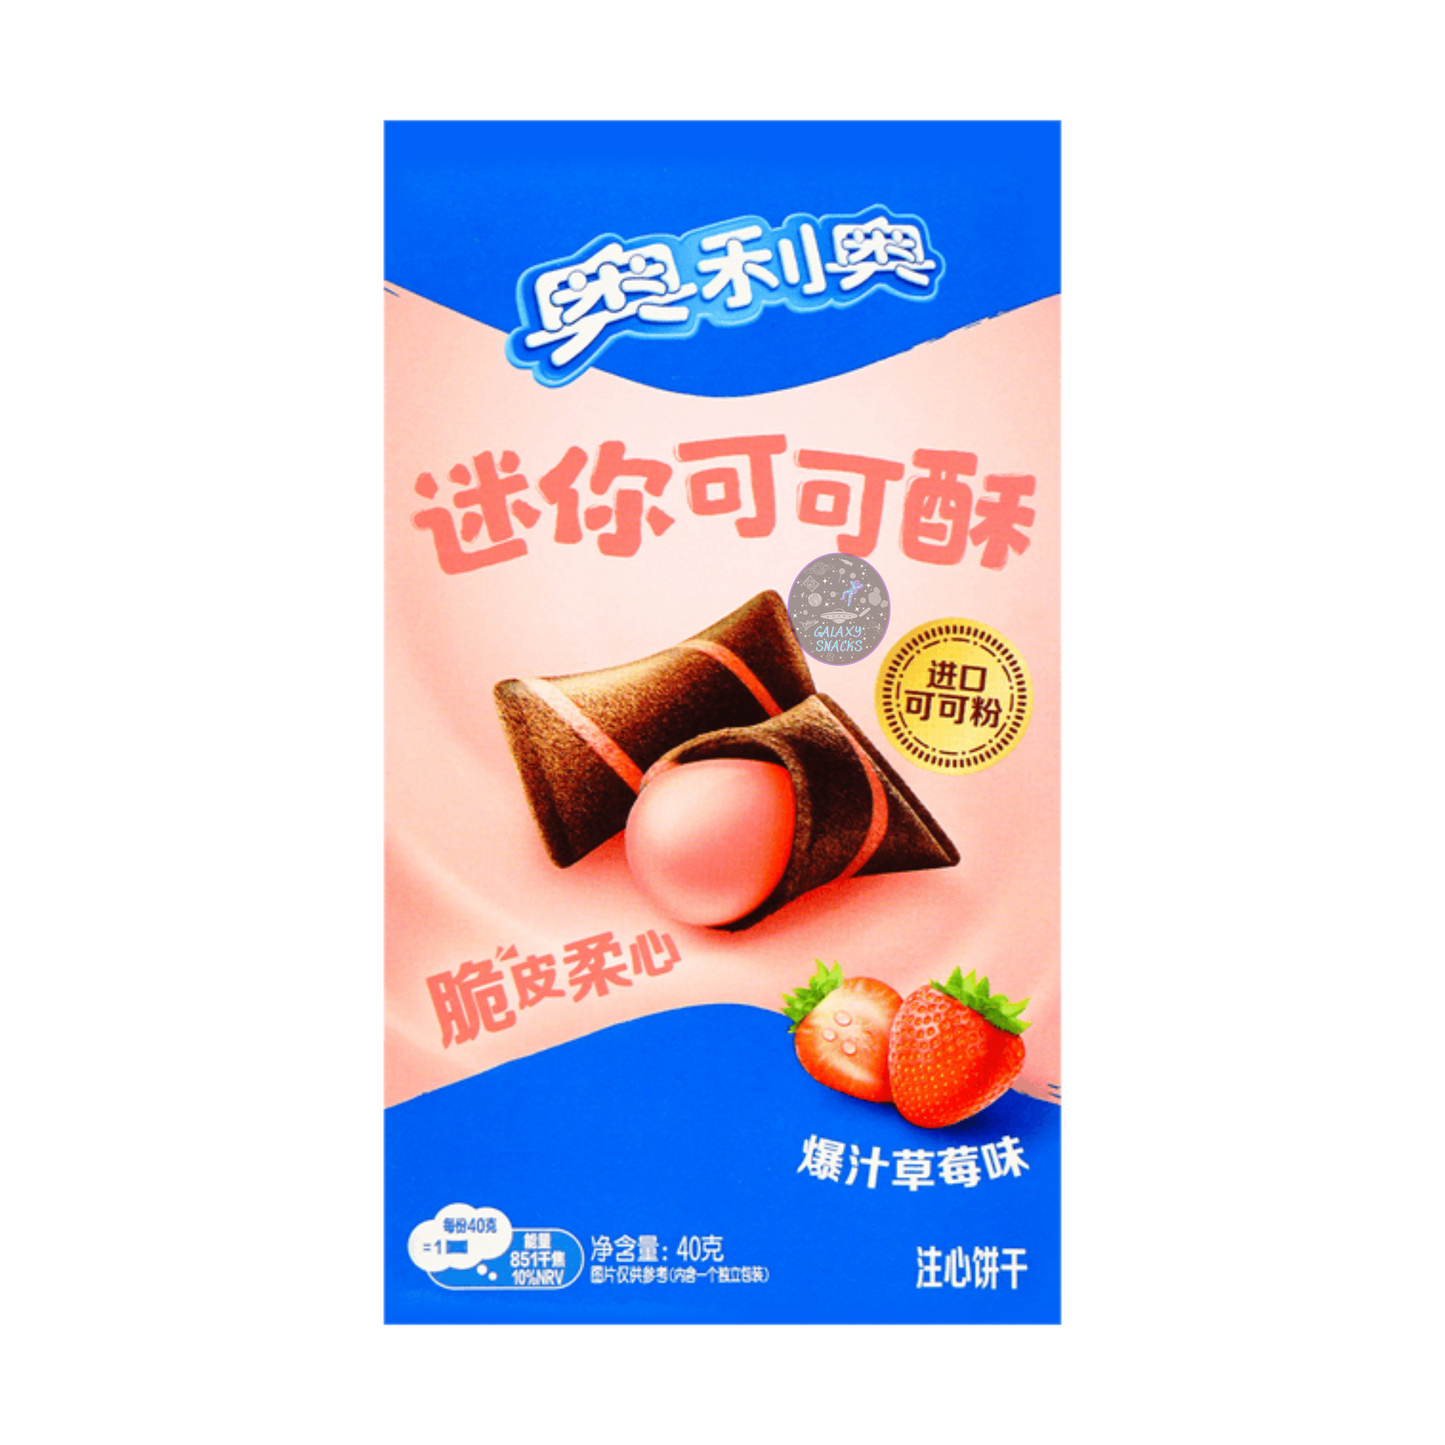 Oreo Mini Strawberry (China)